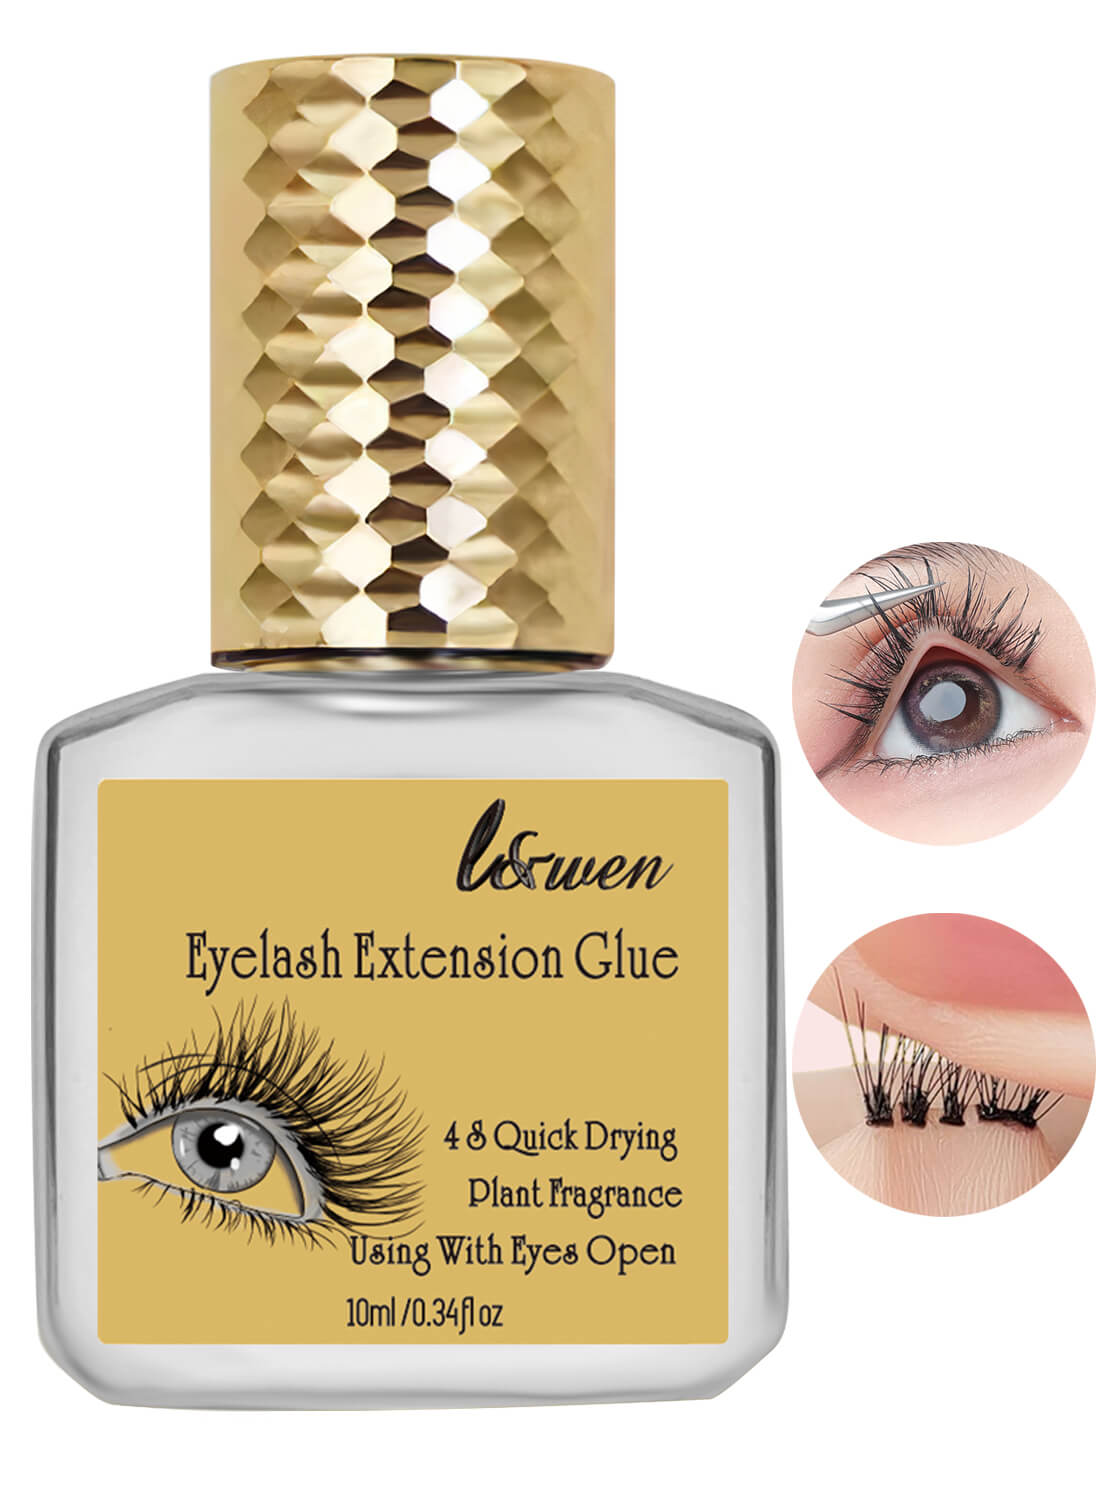 L&wen Eyelash Extension Glue Can Open Eyes 10ML